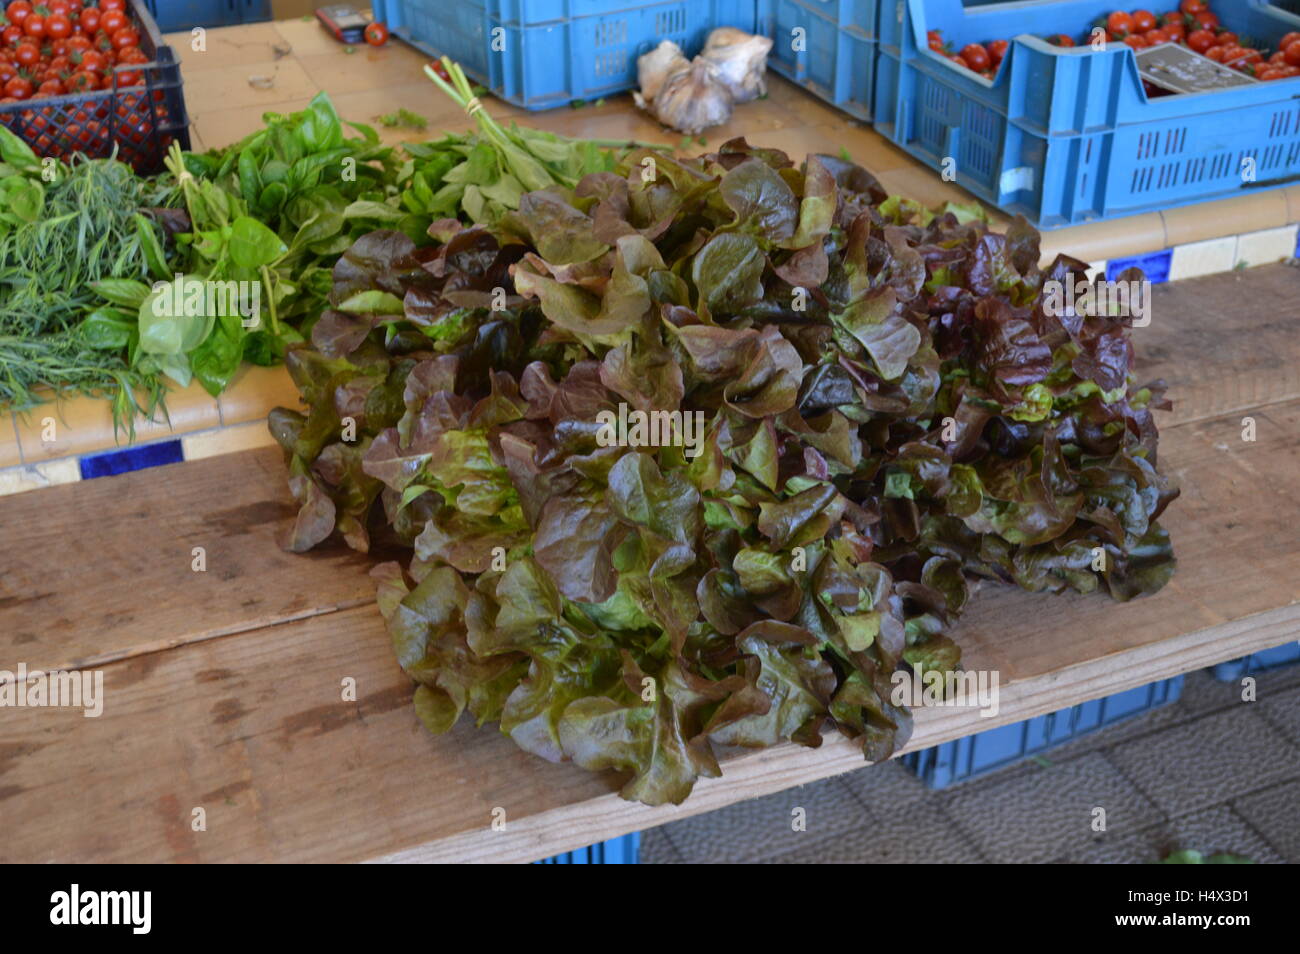 Vegetables, Market, Le Touquet, France, Summer 2016, Greens, Table, leaves, lettuce Stock Photo